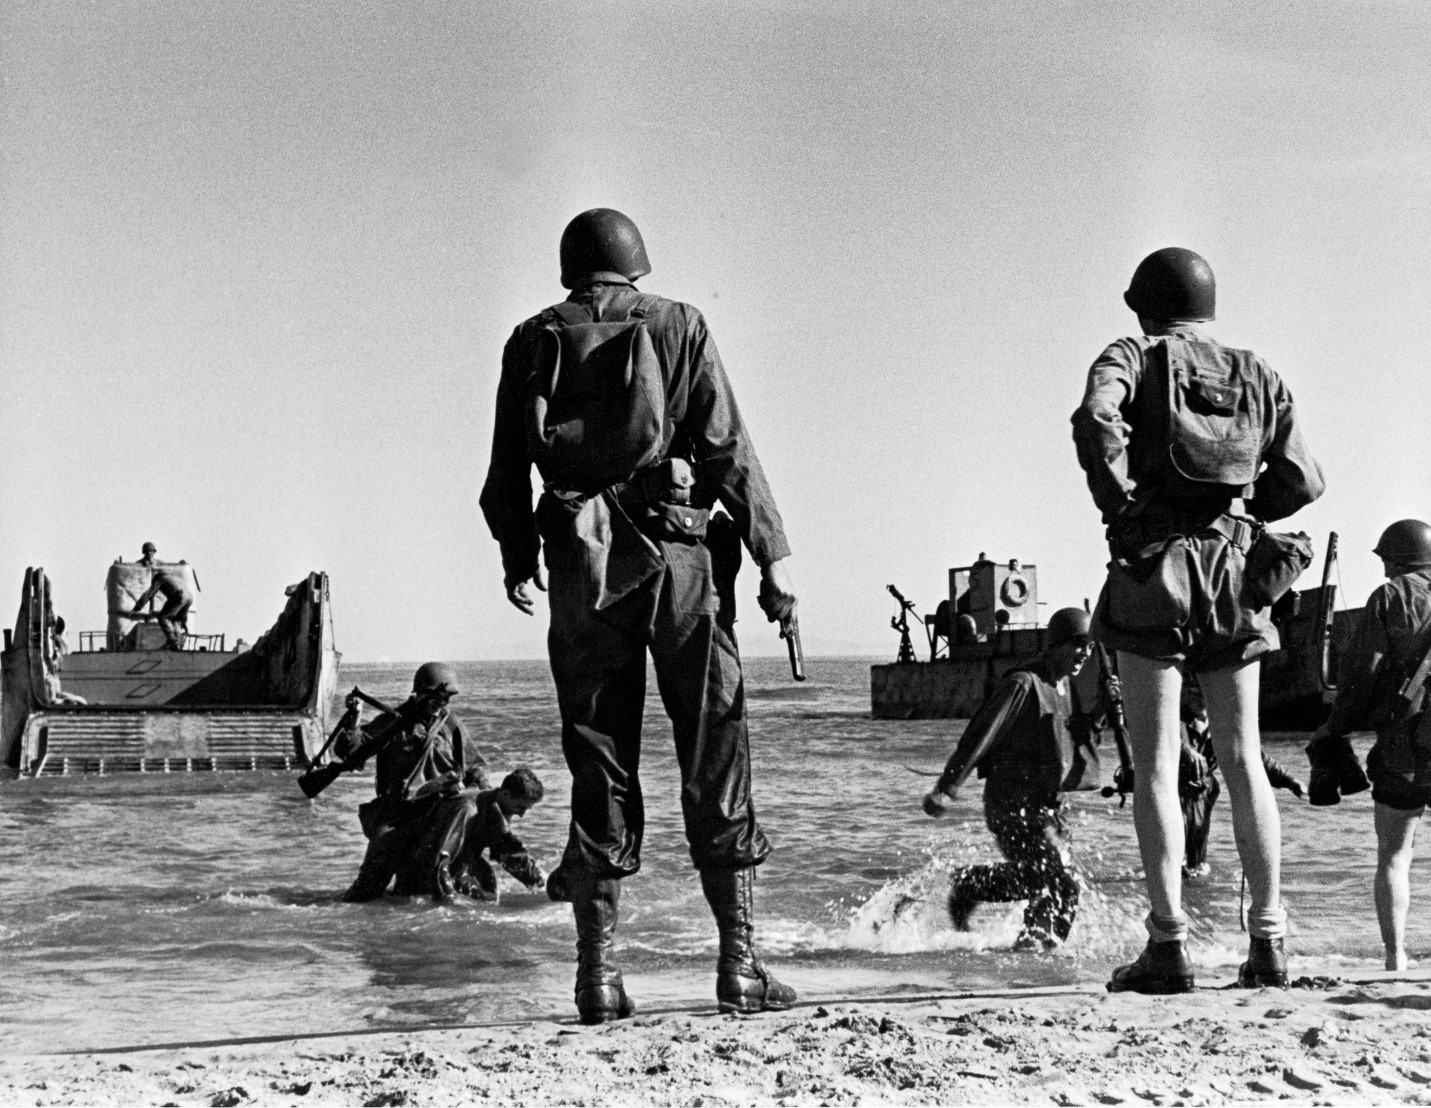 Rangers disembark onto the landing beach in North Africa